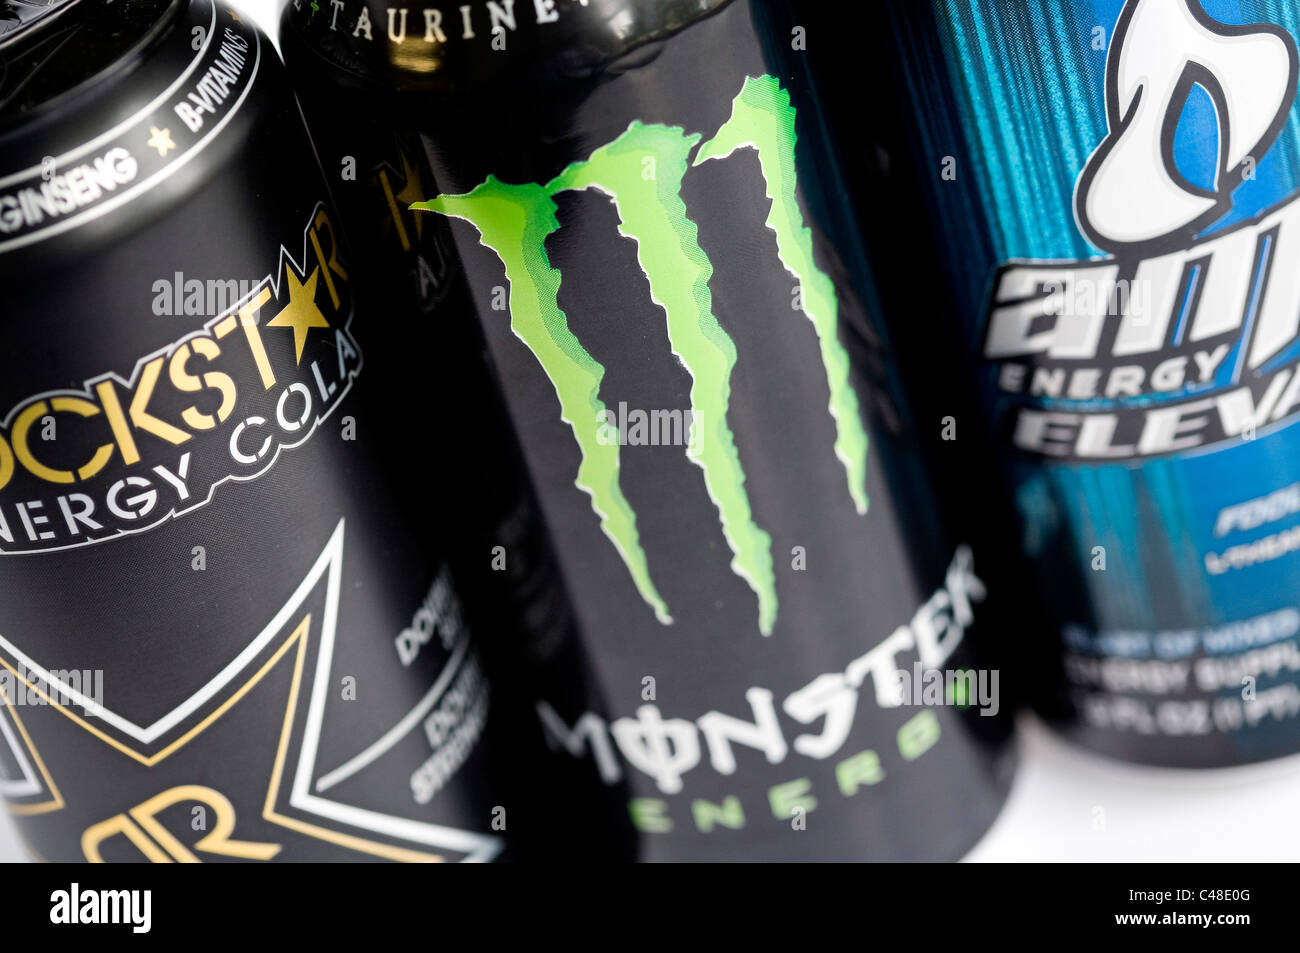 Un mix os RockStar, Monster AMP e Red Bull bevande energetiche. Foto Stock